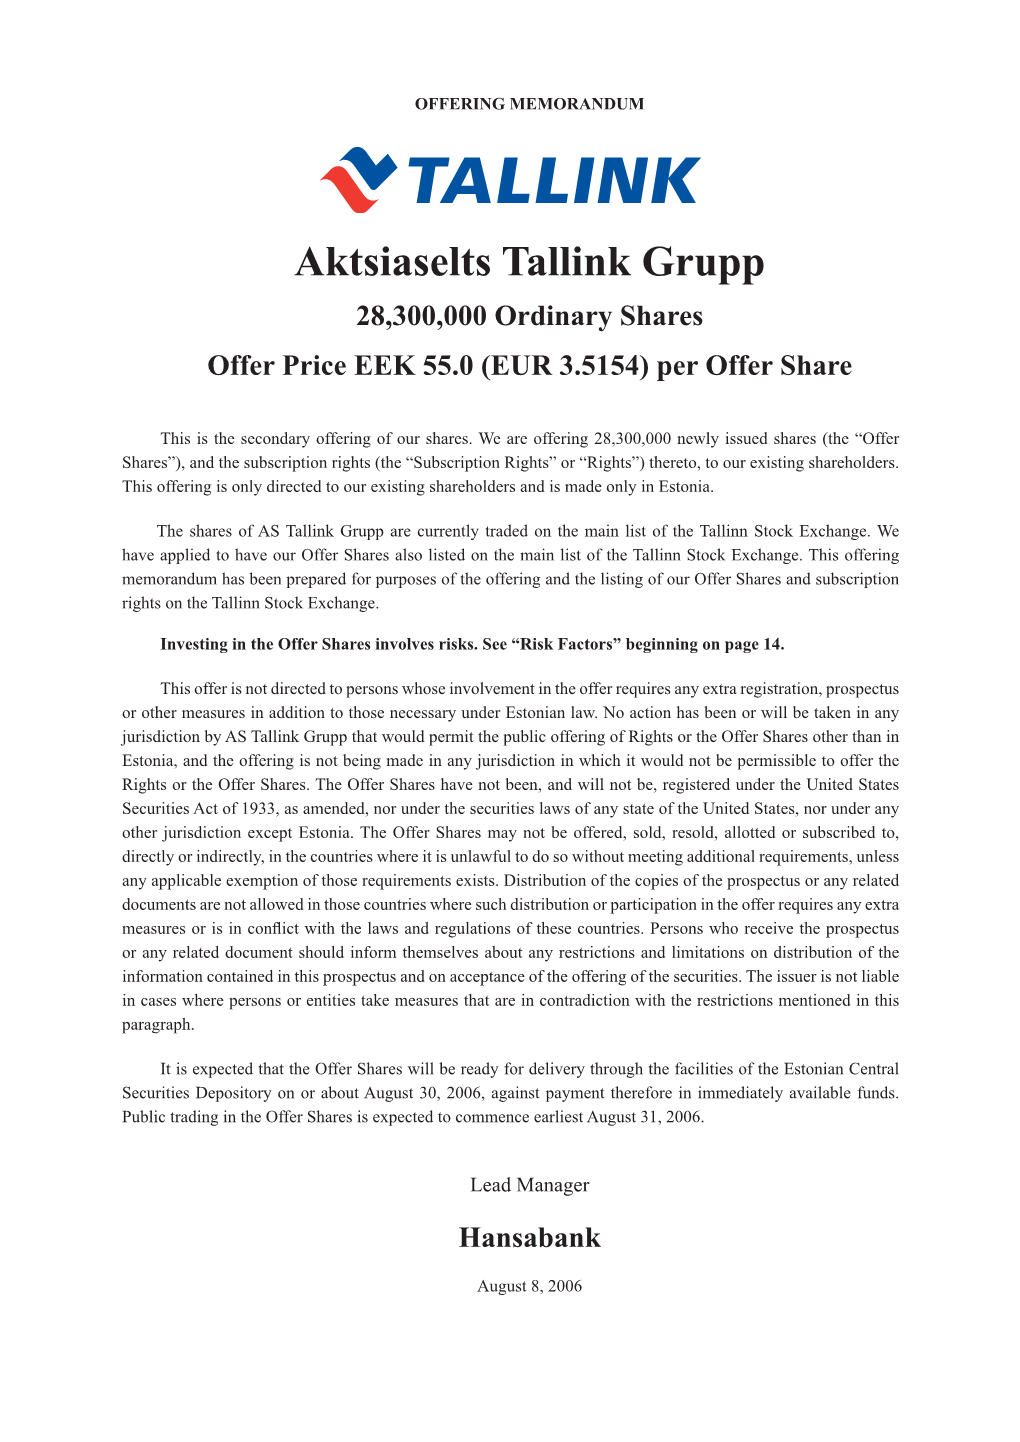 Aktsiaselts Tallink Grupp 28,300,000 Ordinary Shares Offer Price EEK 55.0 (EUR 3.5154) Per Offer Share